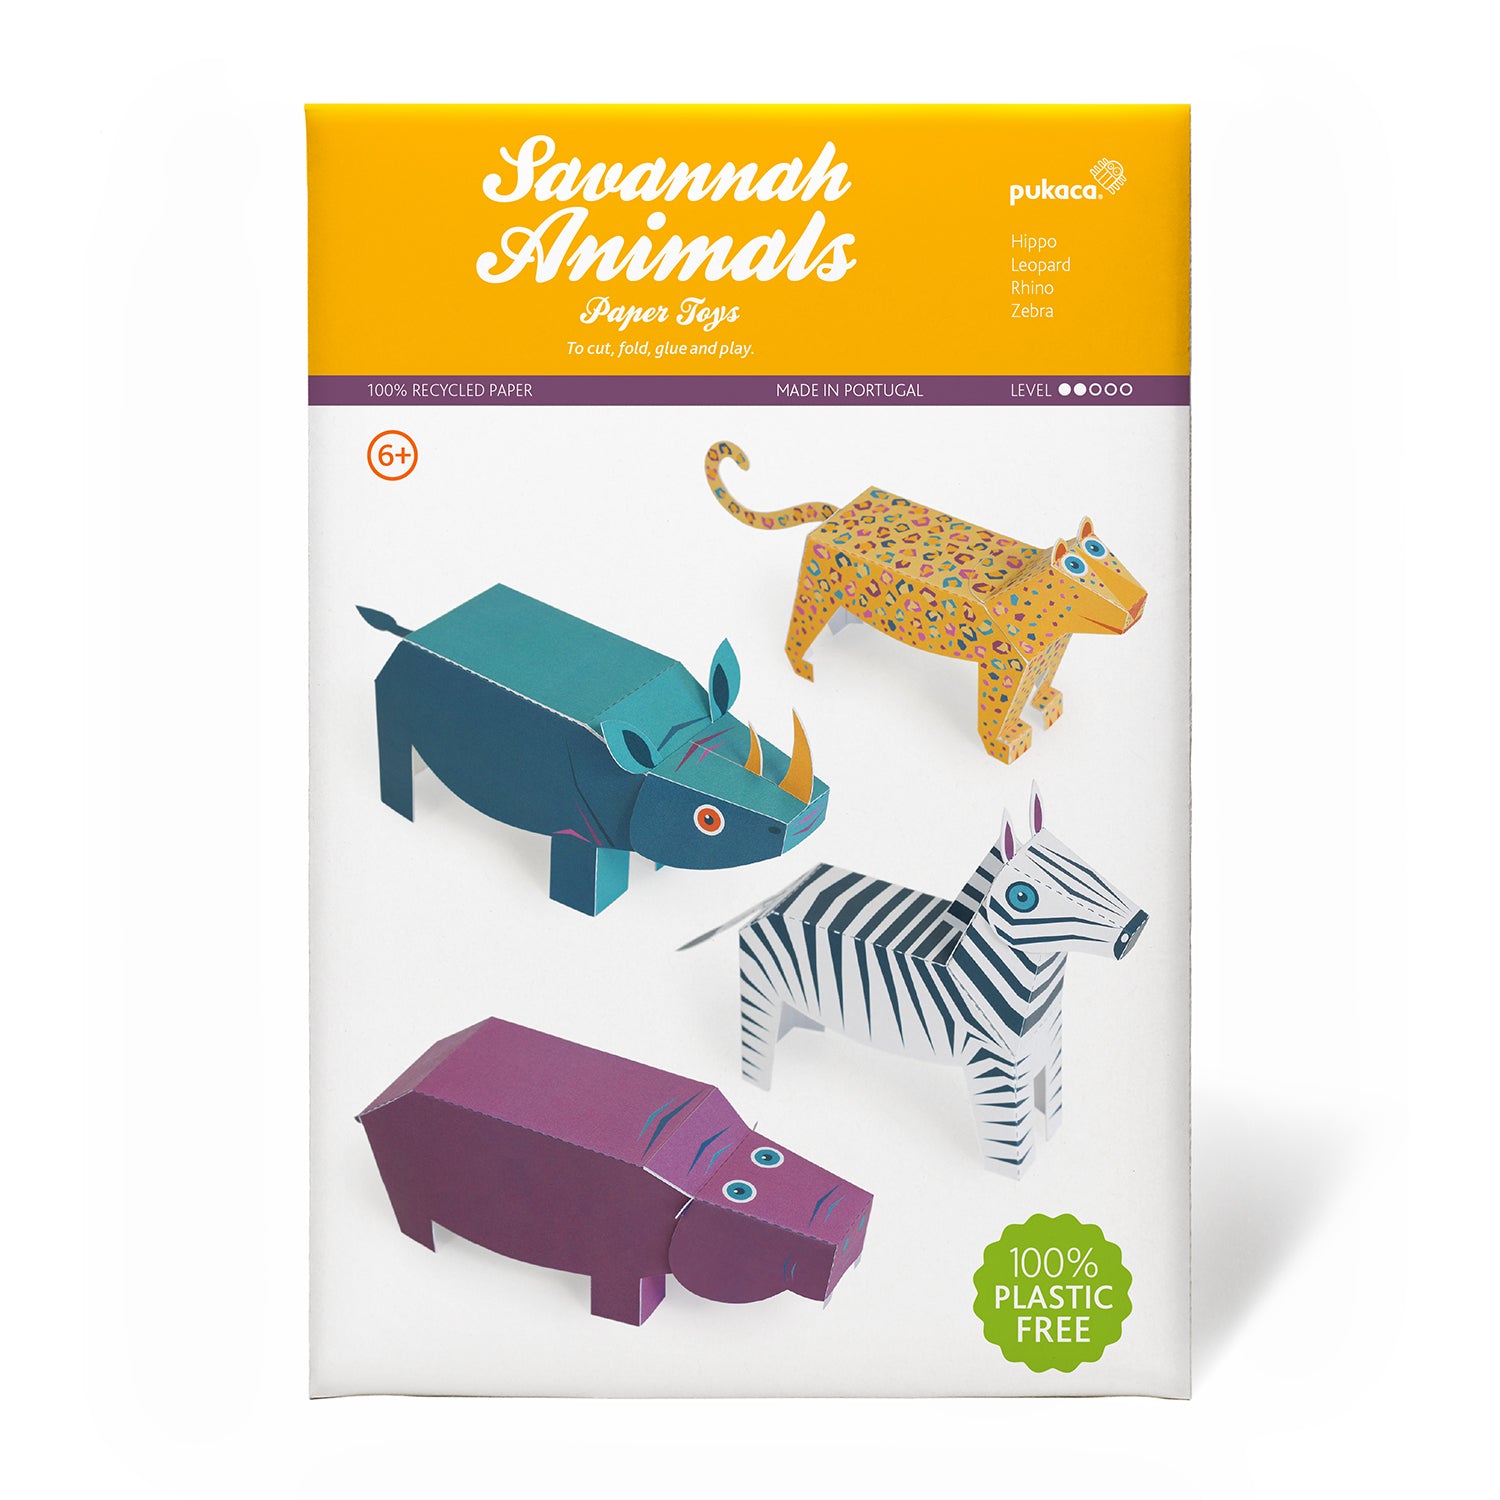 Savannah Animals - Paper Toy